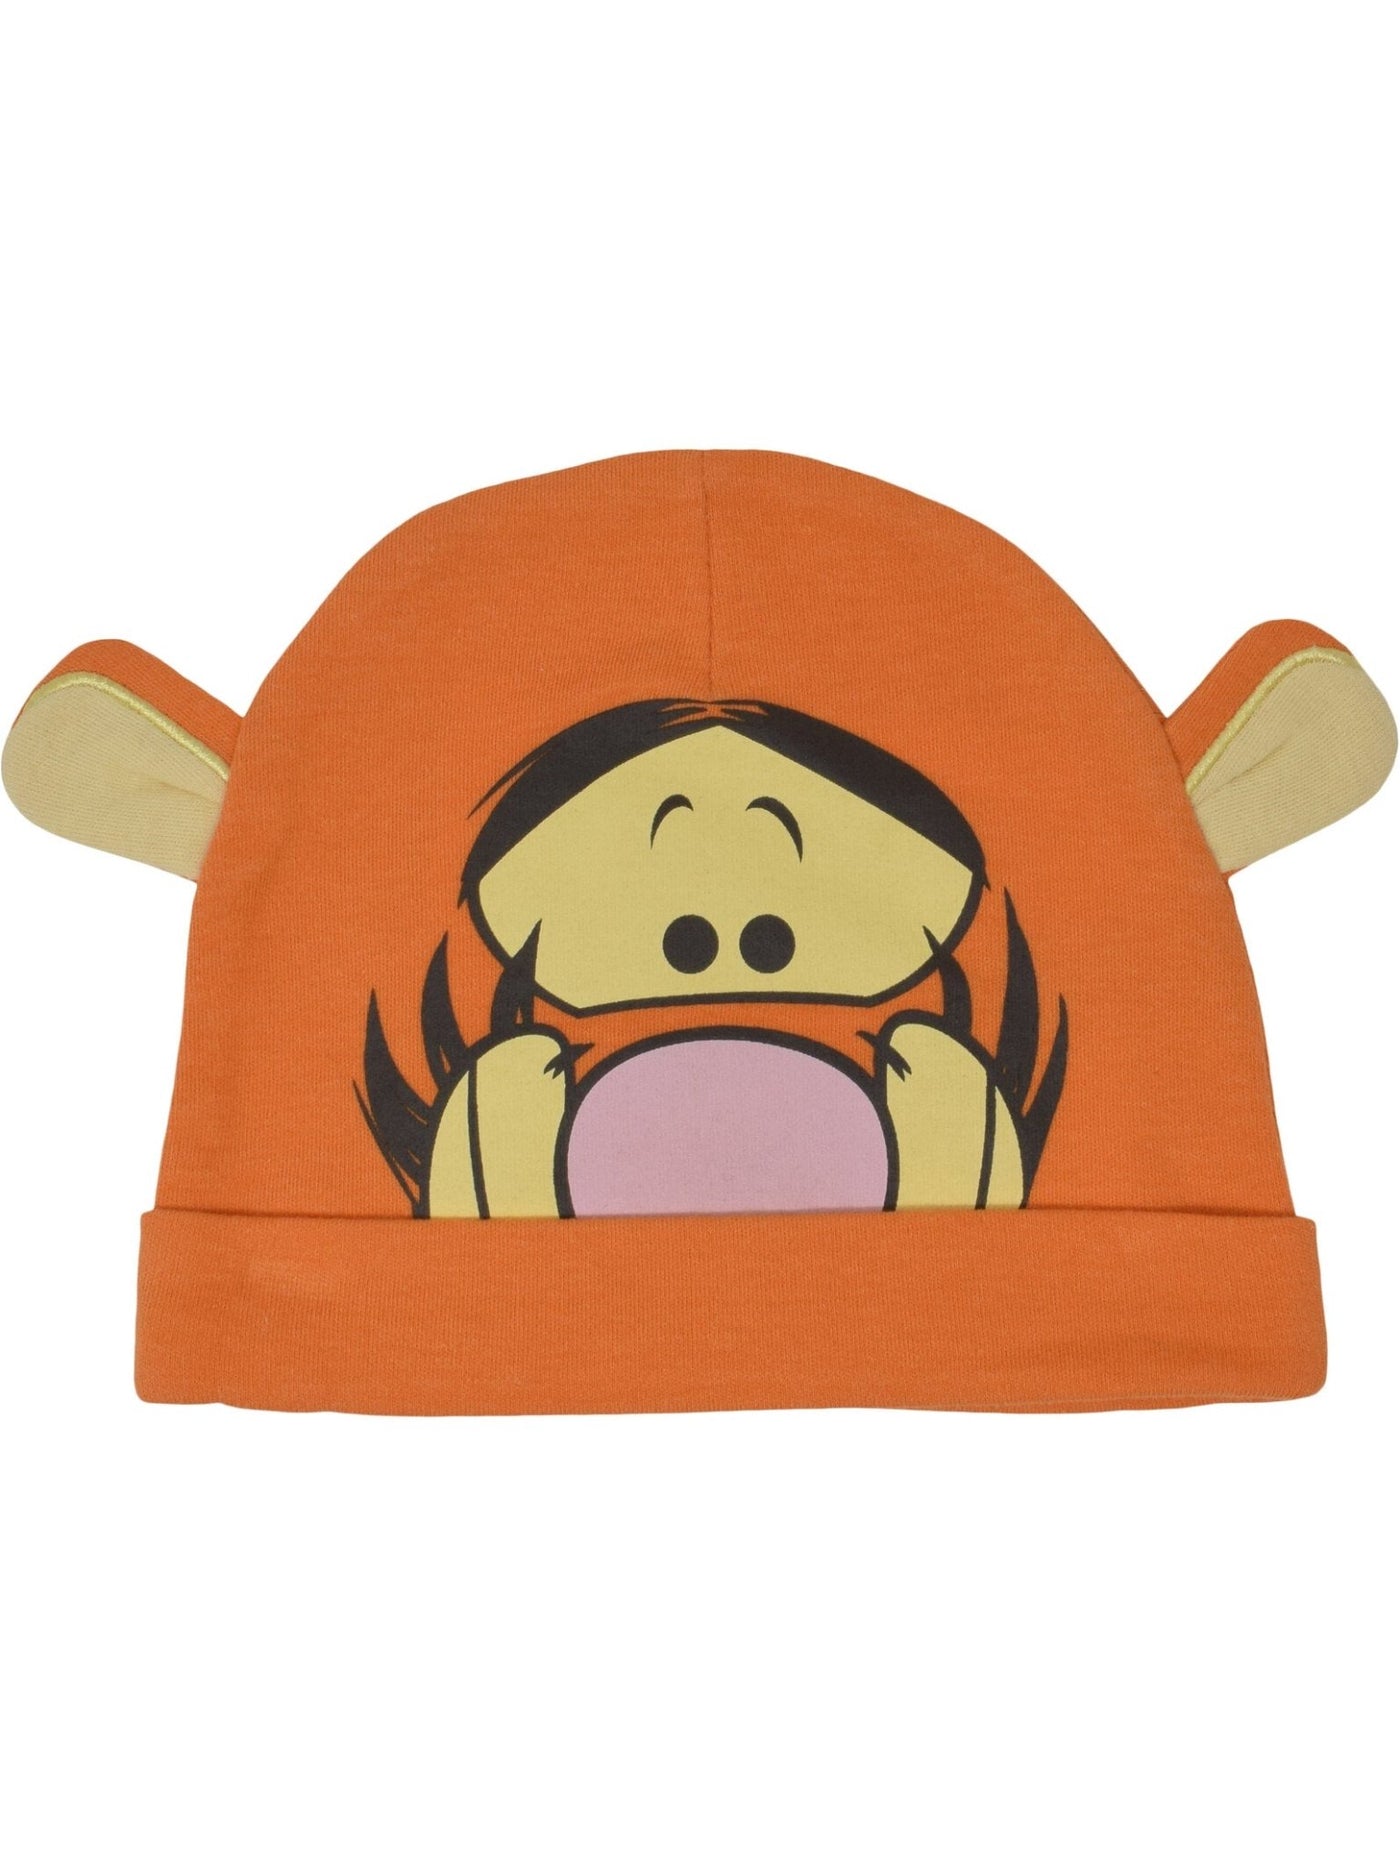 Disney Winnie the Pooh Tigger Cosplay Bodysuit and Hat Set - imagikids